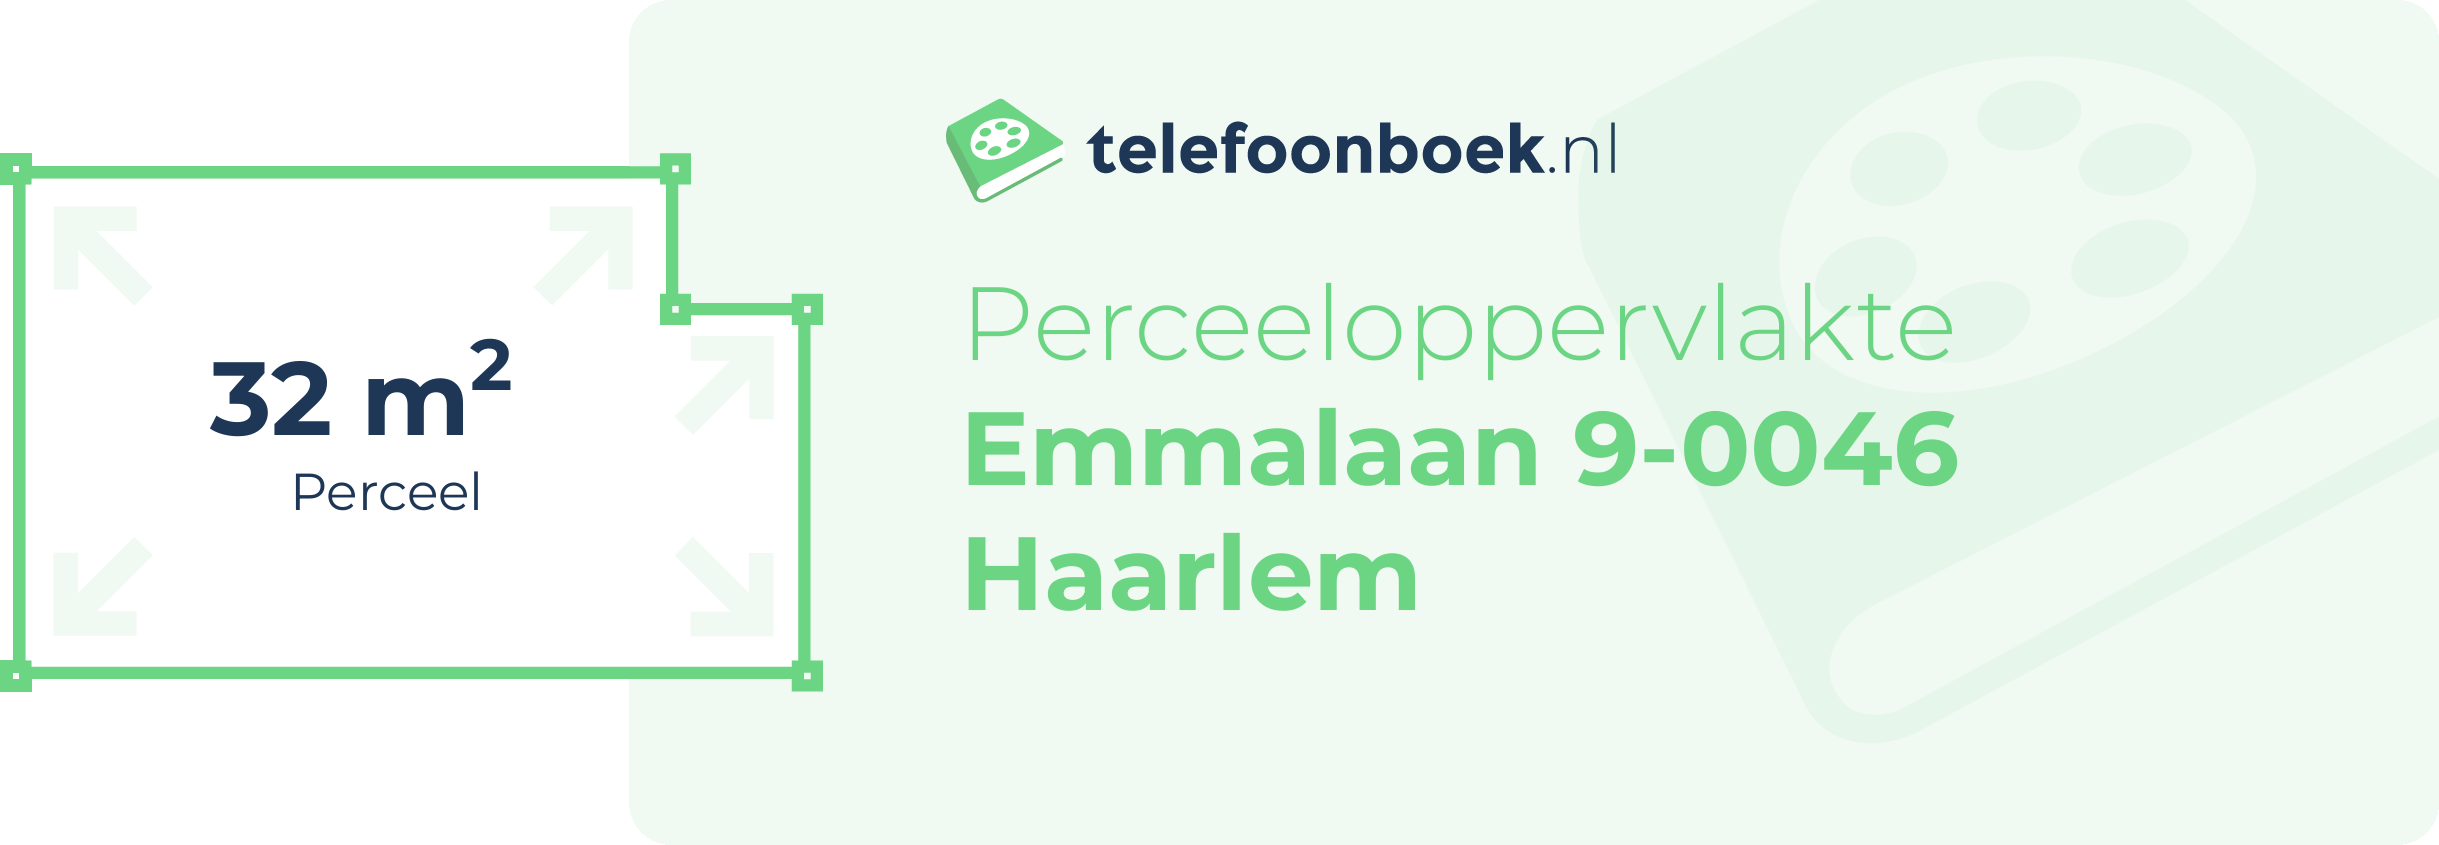 Perceeloppervlakte Emmalaan 9-0046 Haarlem